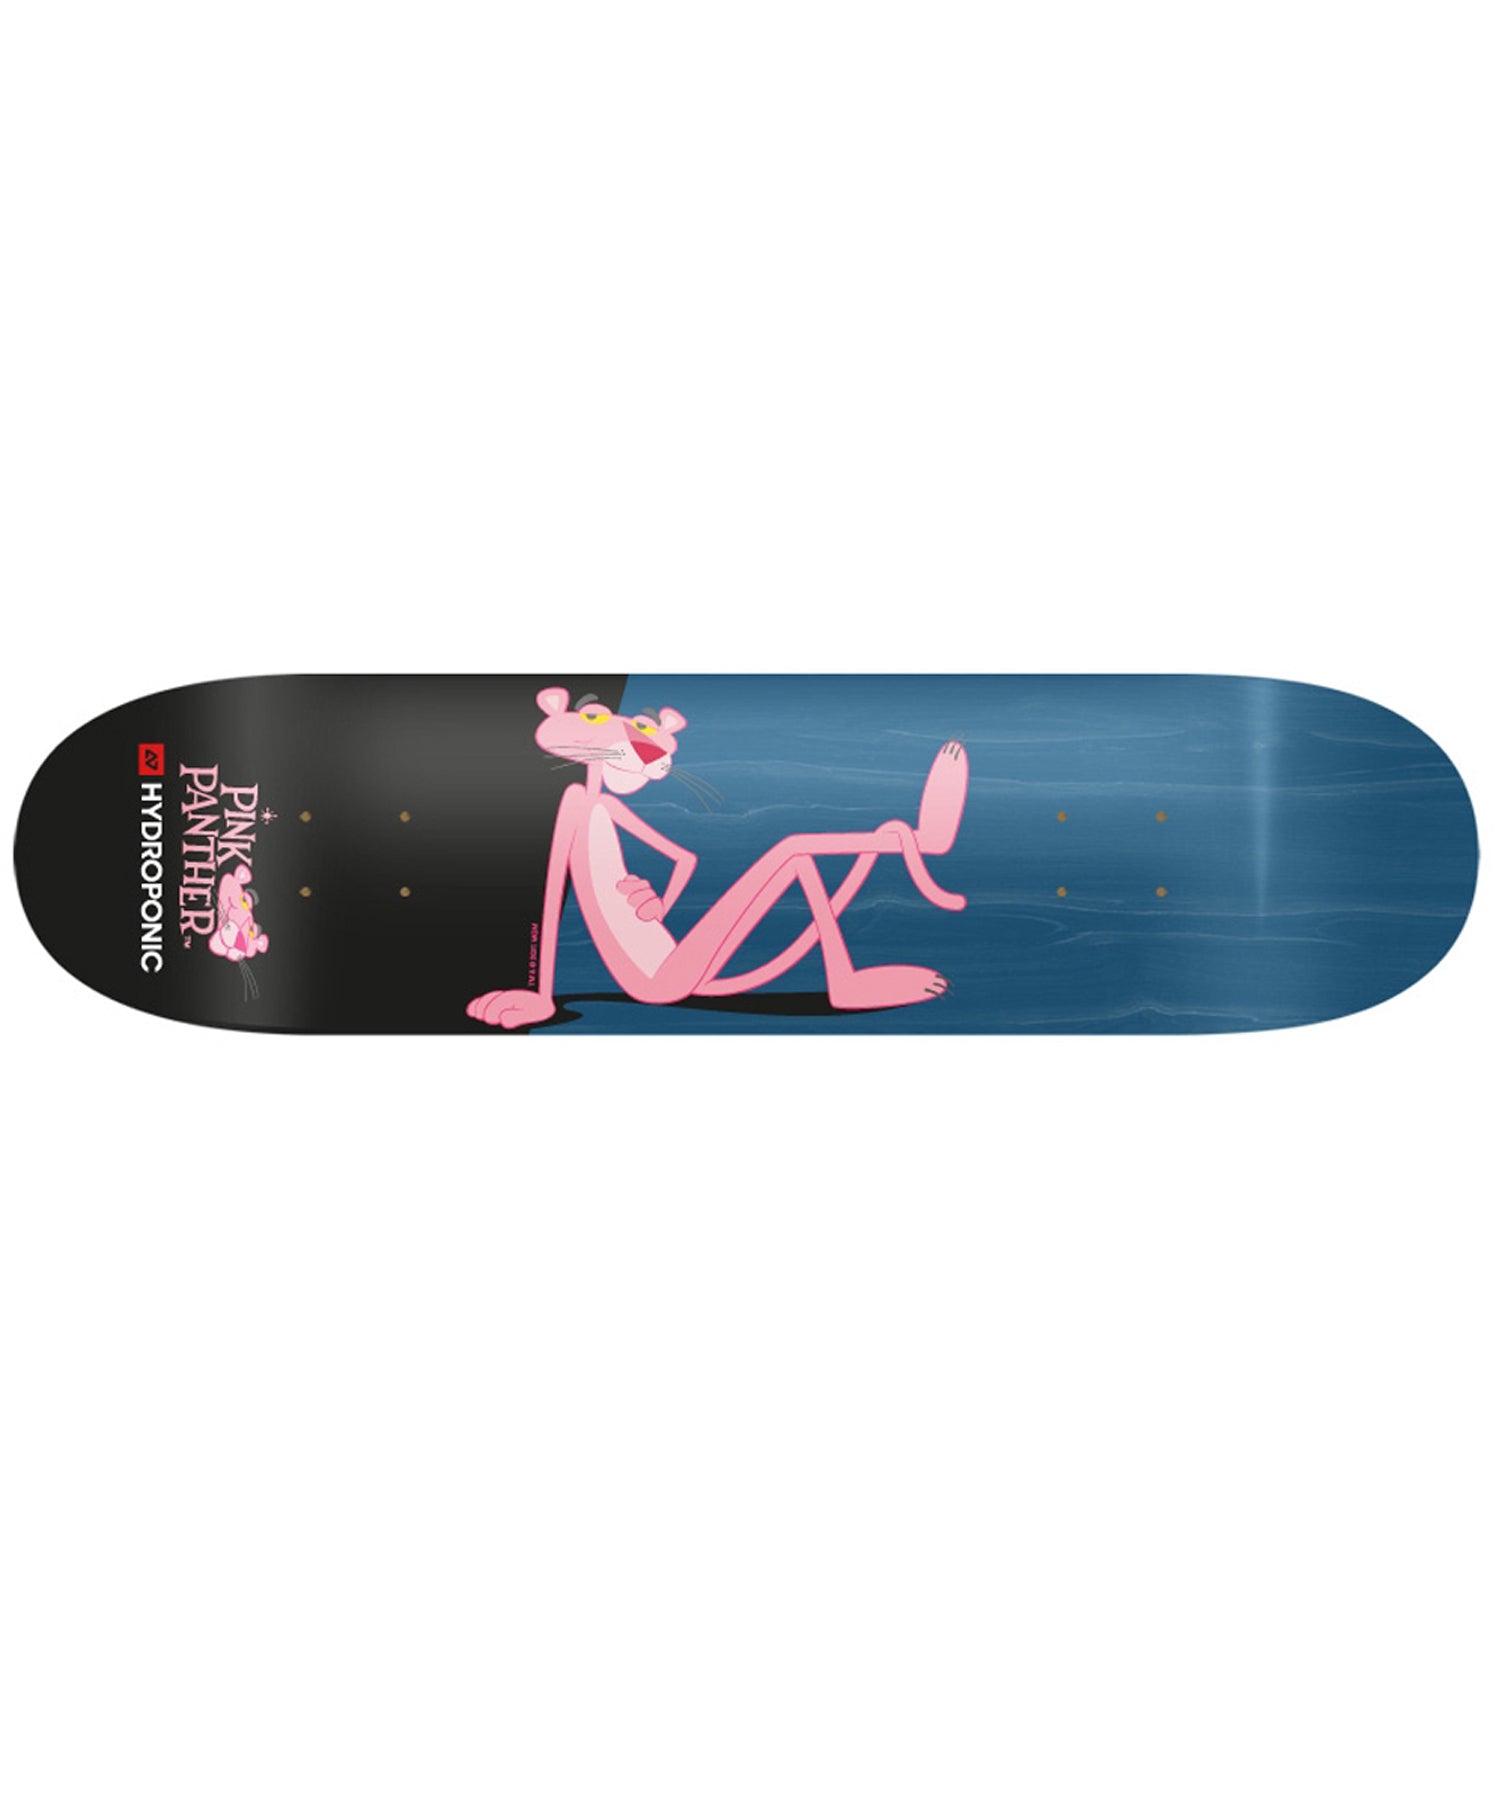 hydroponic-pink panther wait-8.125"-tabla de skate-8"-cóncavo-alto-7 capas de arce canadiense- con epoxy